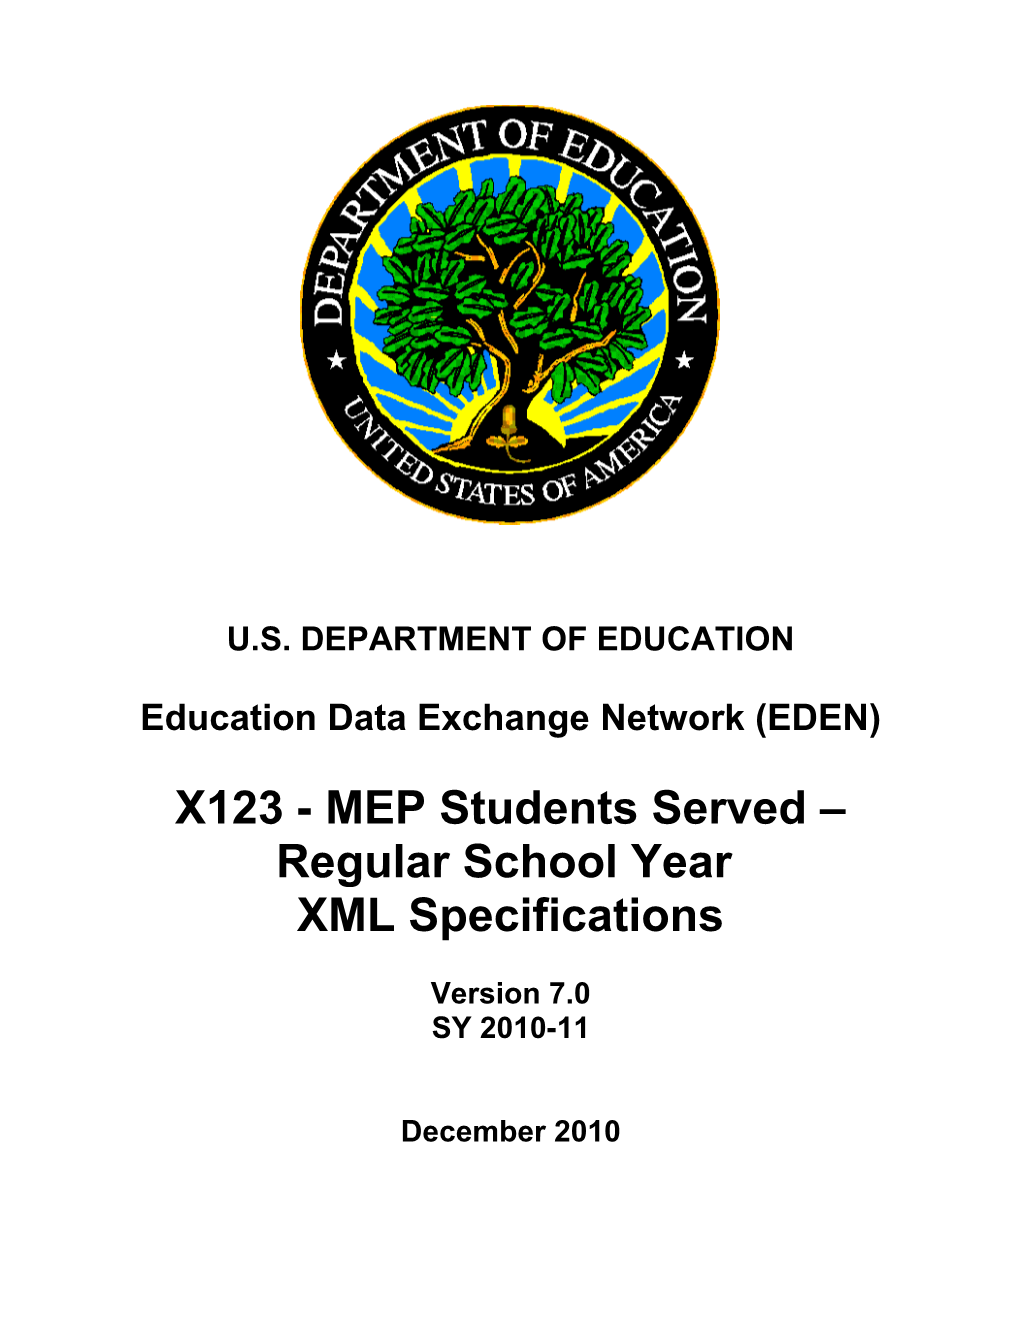 MEP Students Served Regular School Year XML Specifications